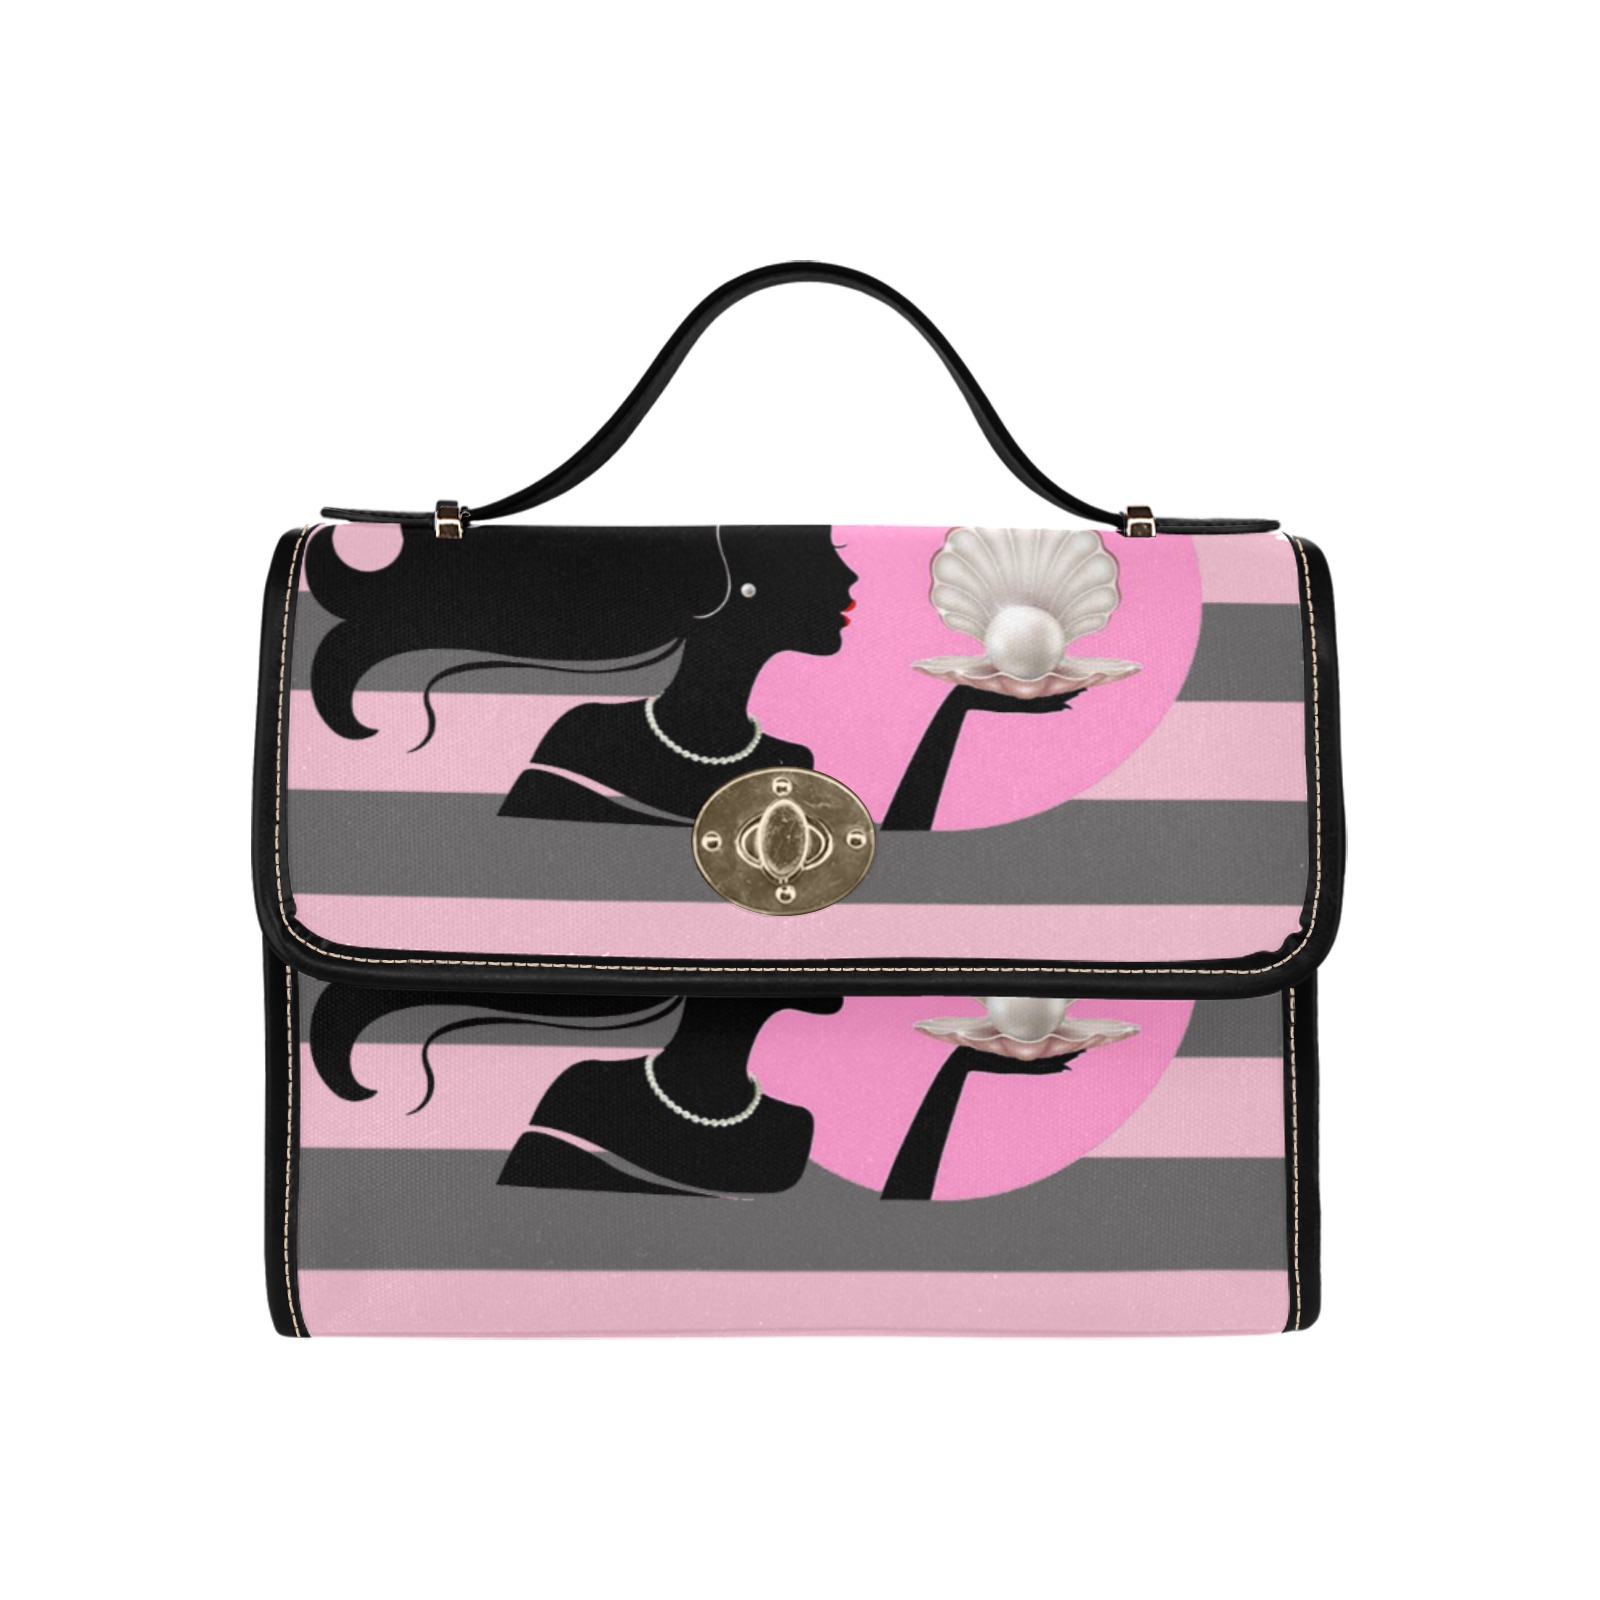 Elegant striped silhouette-patterned handbag.